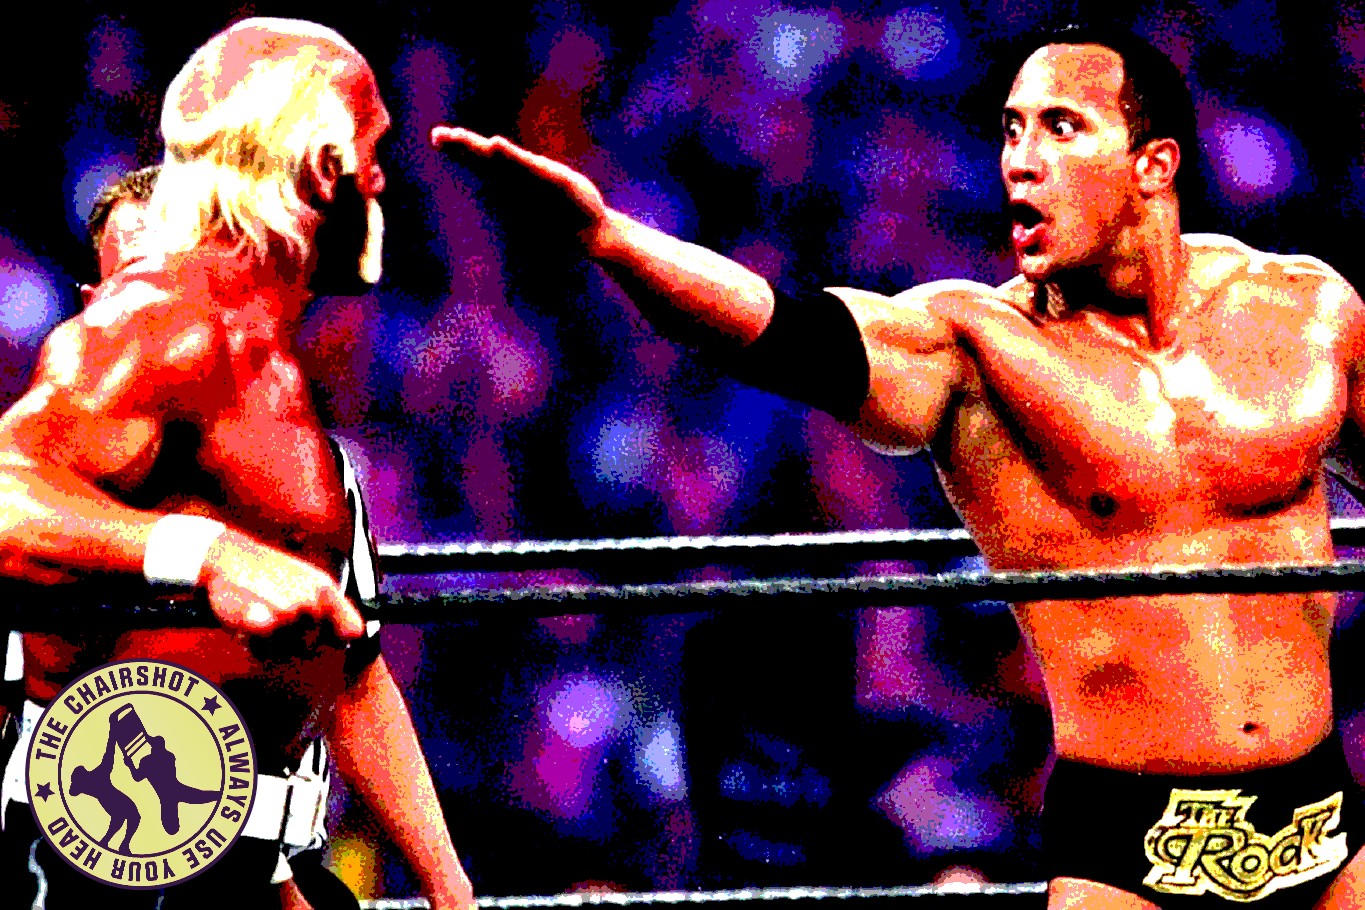 Hollywood Hulk Hogan The Rock WWE WrestleMania 18